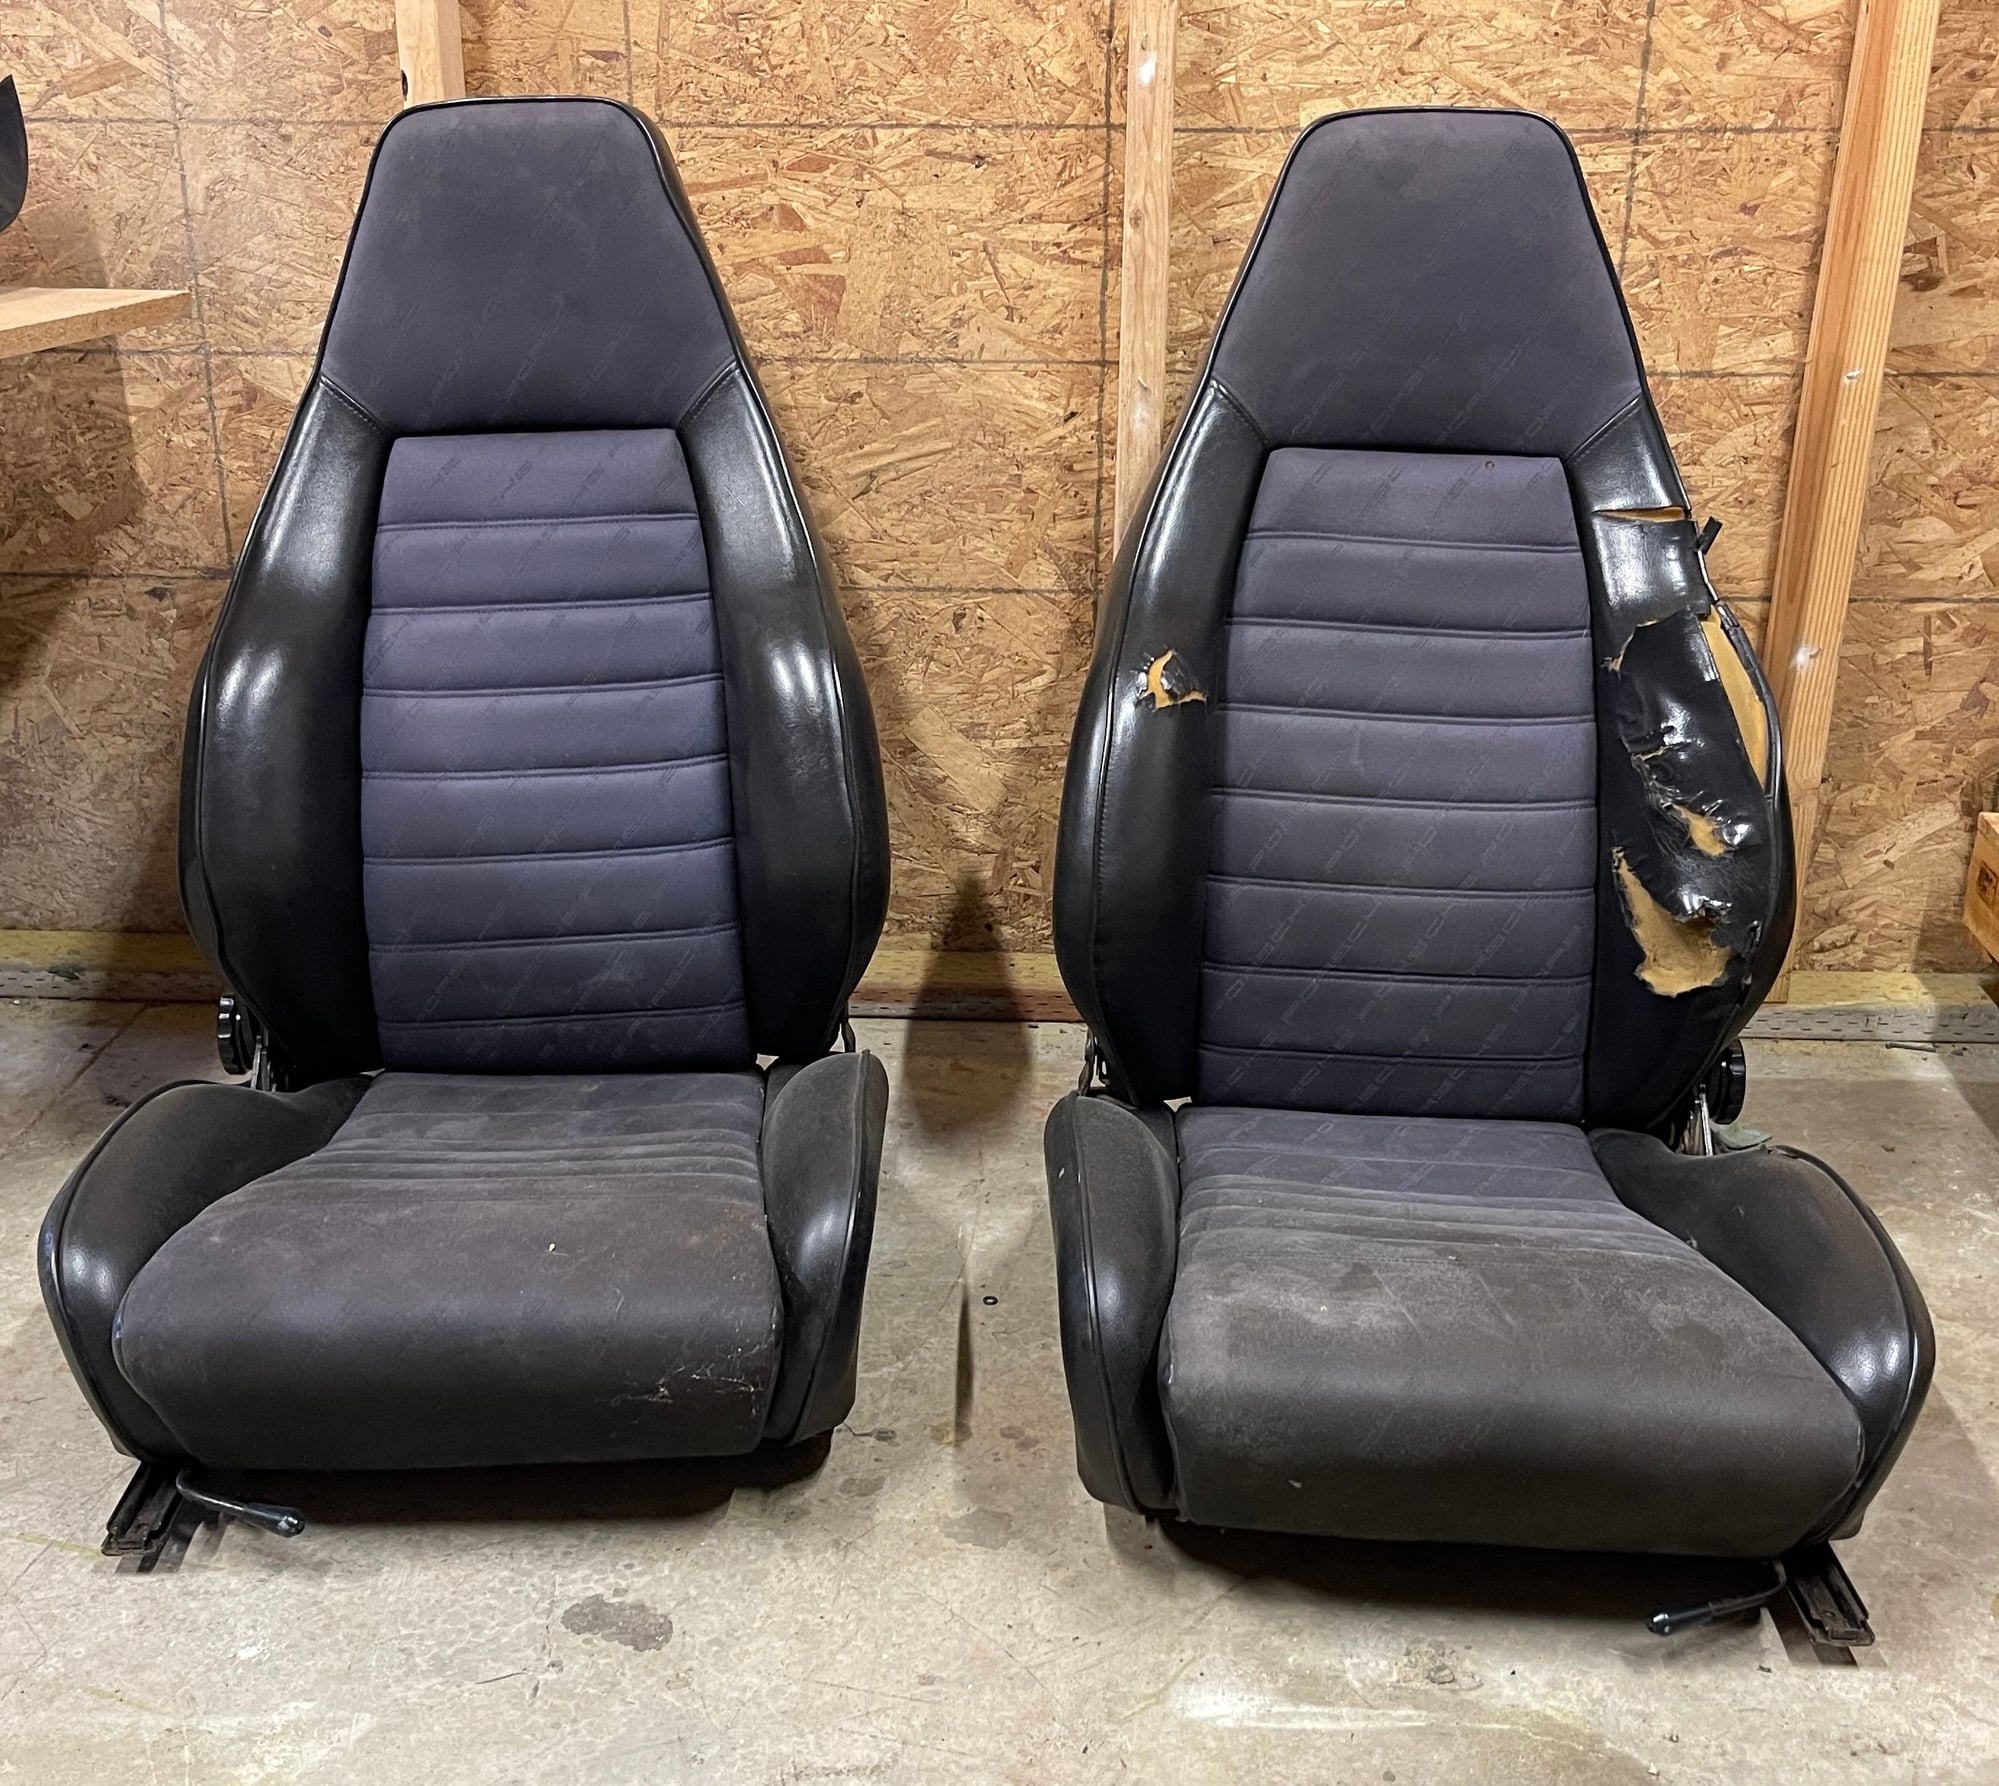 Interior/Upholstery - 81-84 Sport Seats w/ Porsche Script - Used - 1981 to 1984 Porsche 911 - Seattle, WA 98102, United States